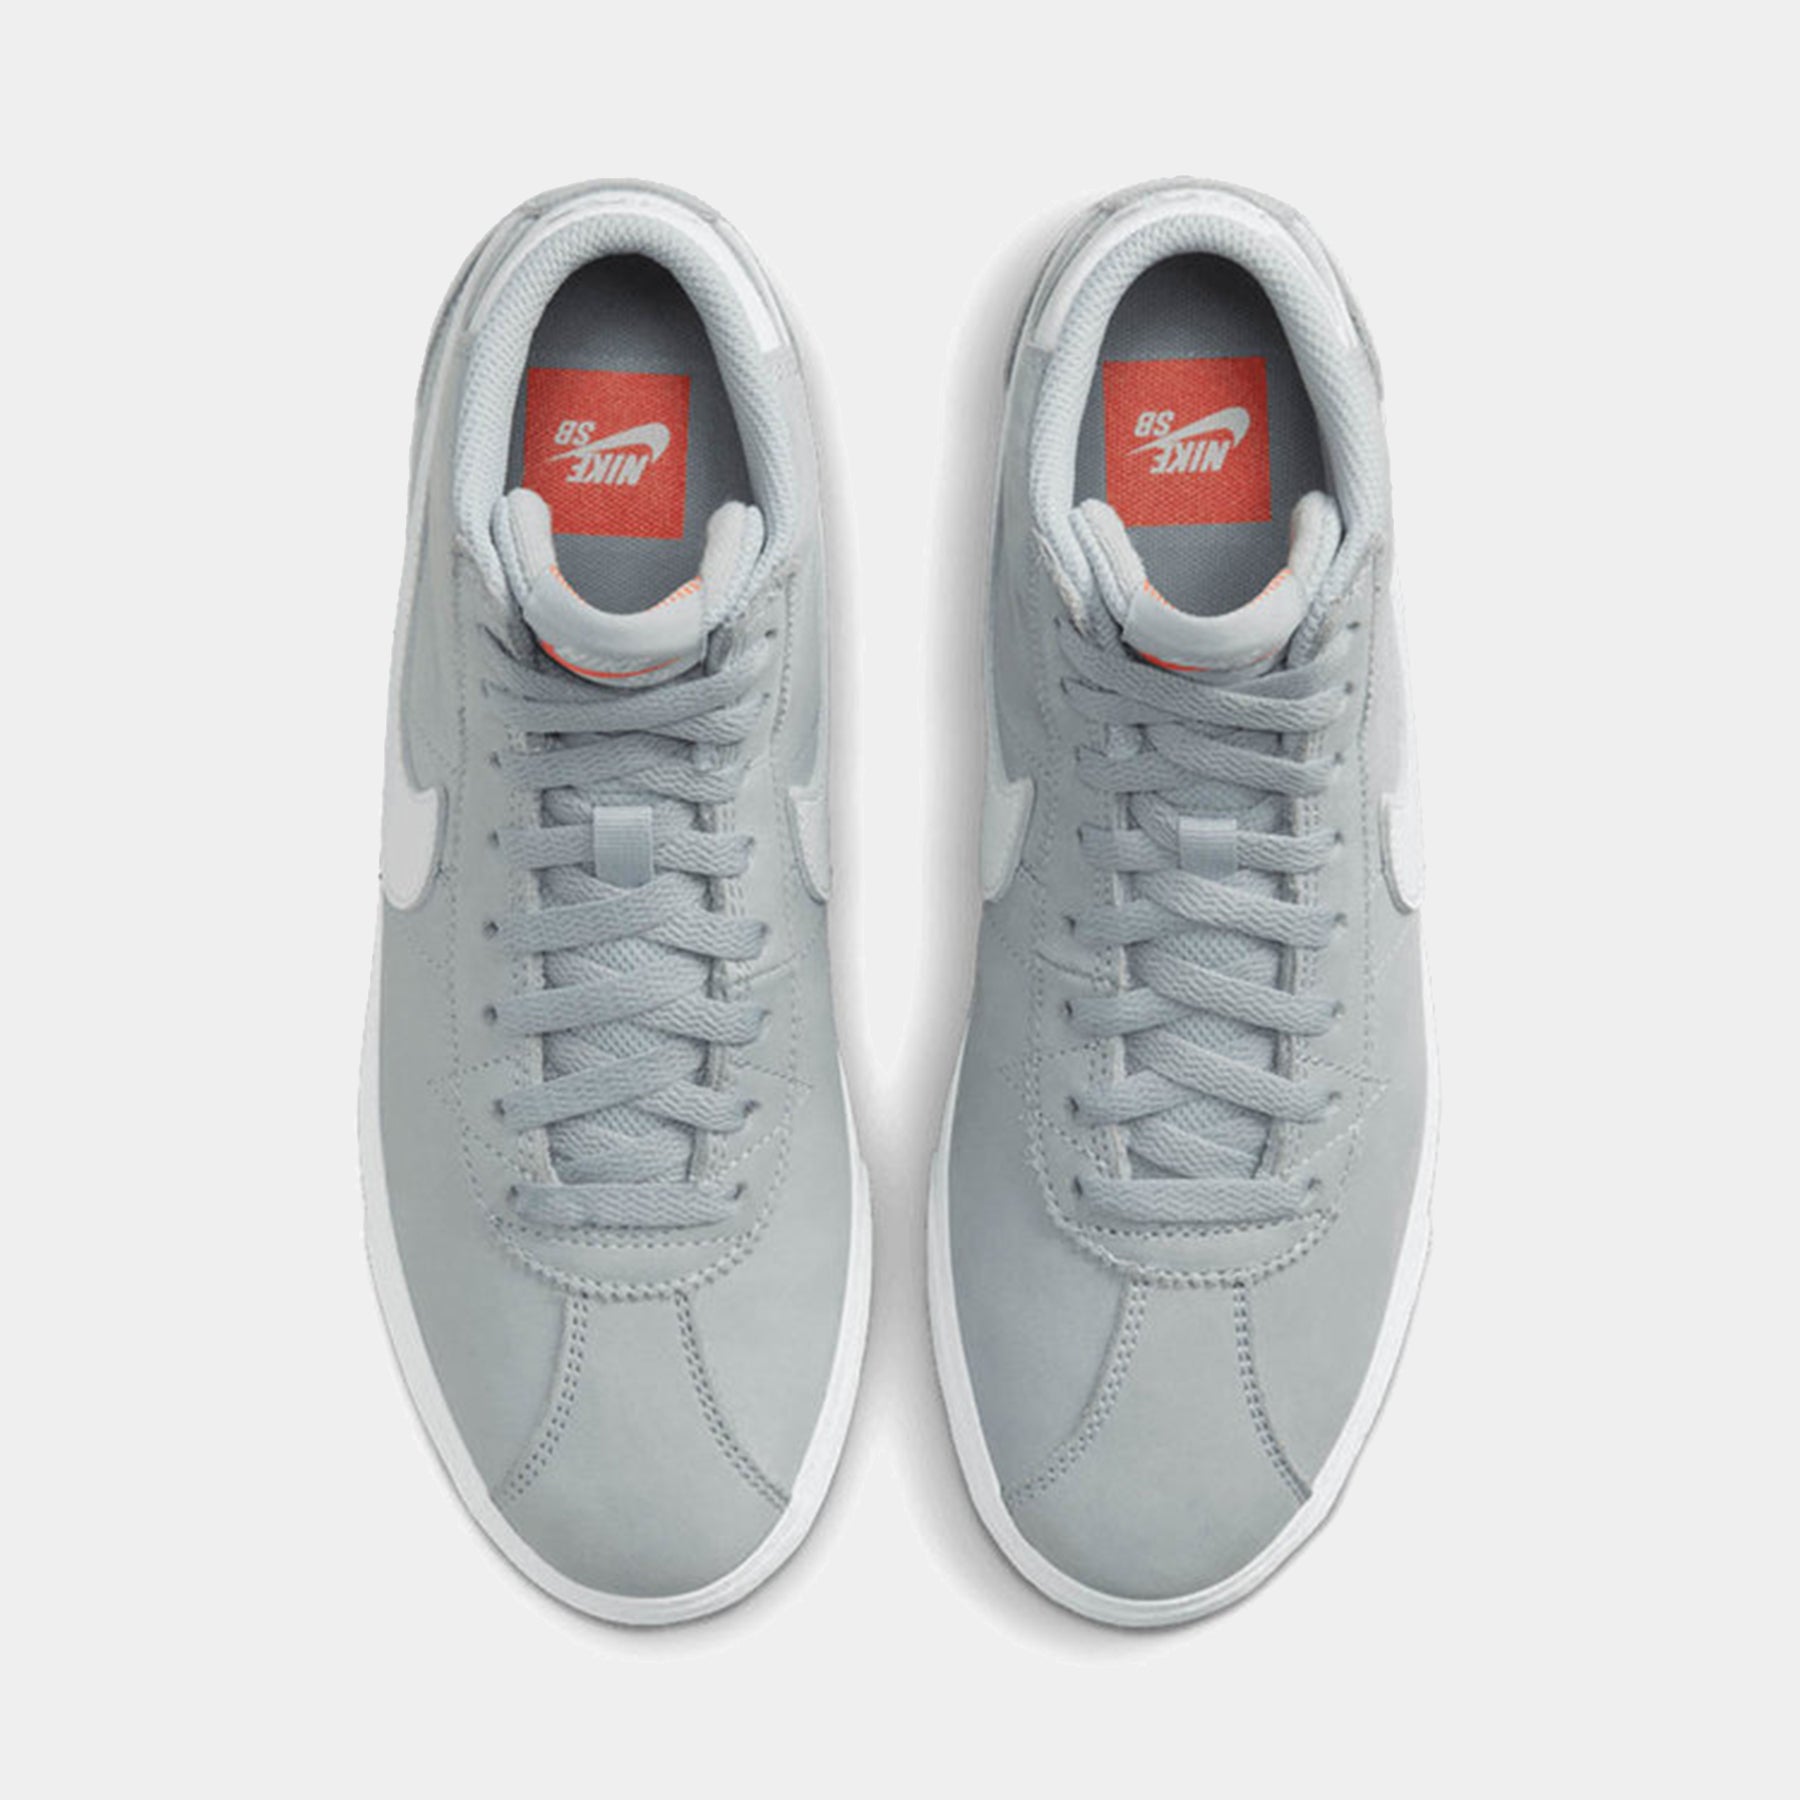 Nike SB - Bruin High ISO - Wolf Grey